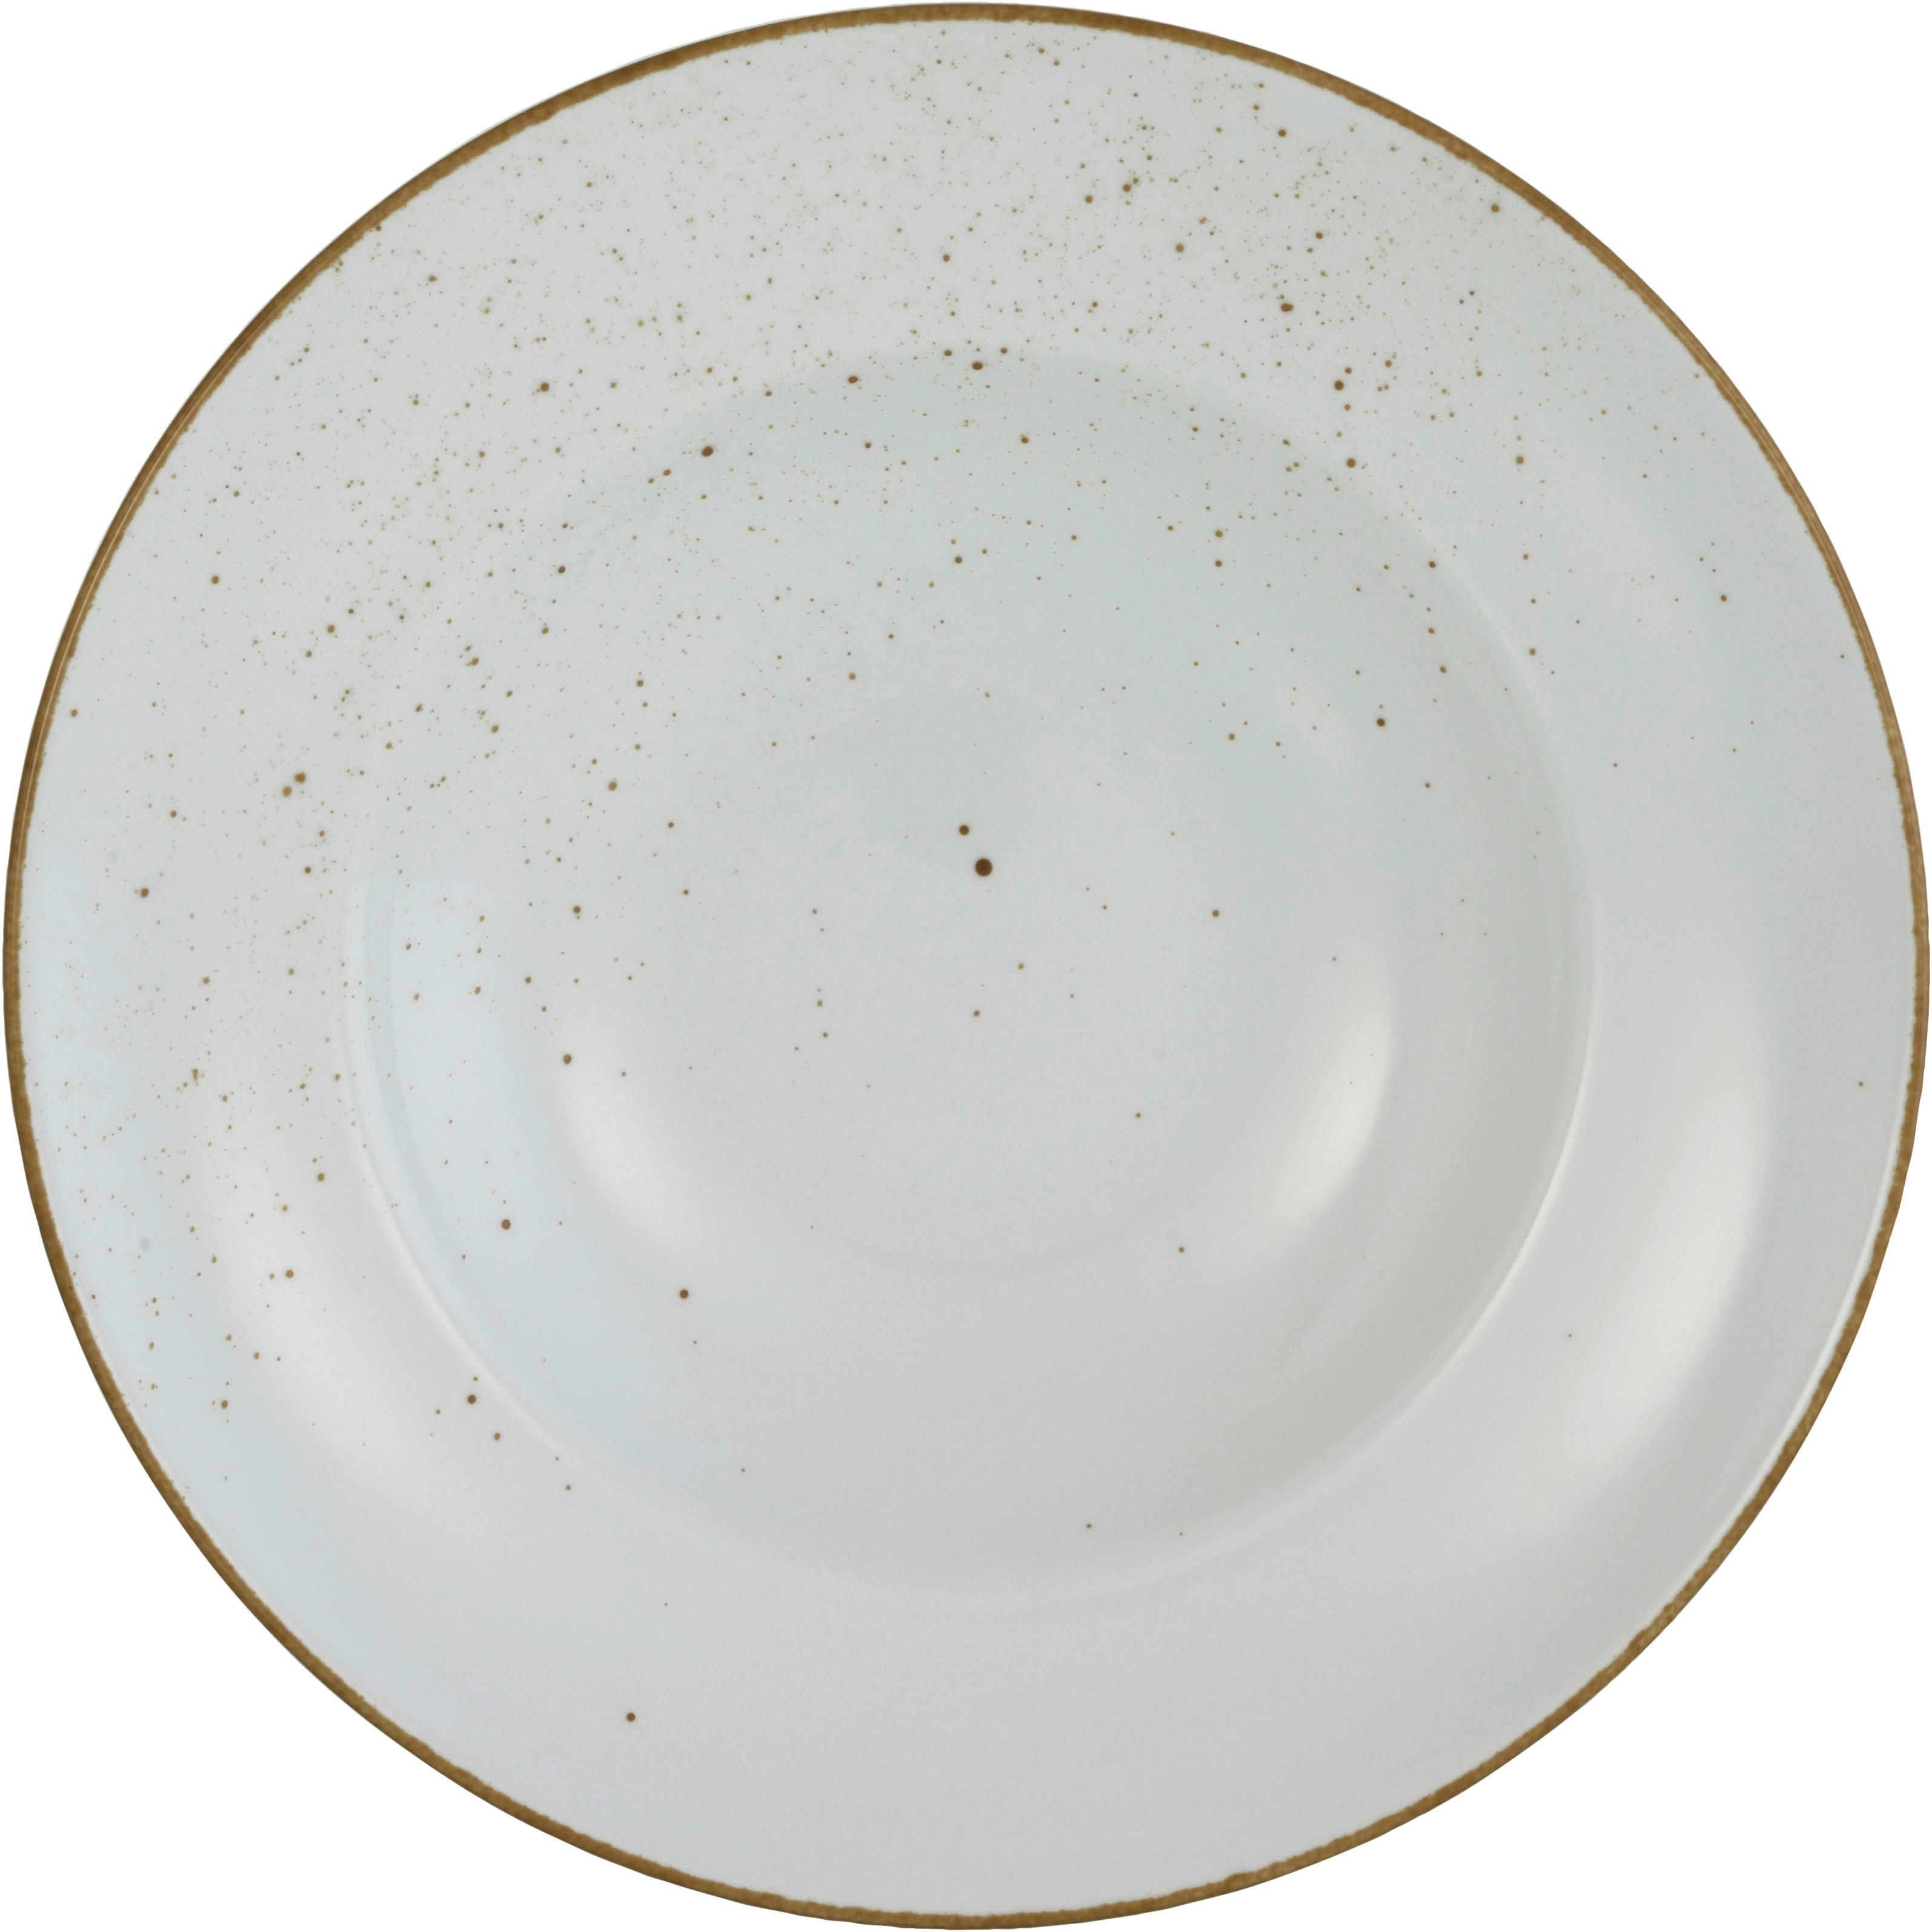 Pastateller Capri aus Porzellan Ø ca. 27cm - Weiß, MODERN, Keramik (27/27/4cm) - Premium Living